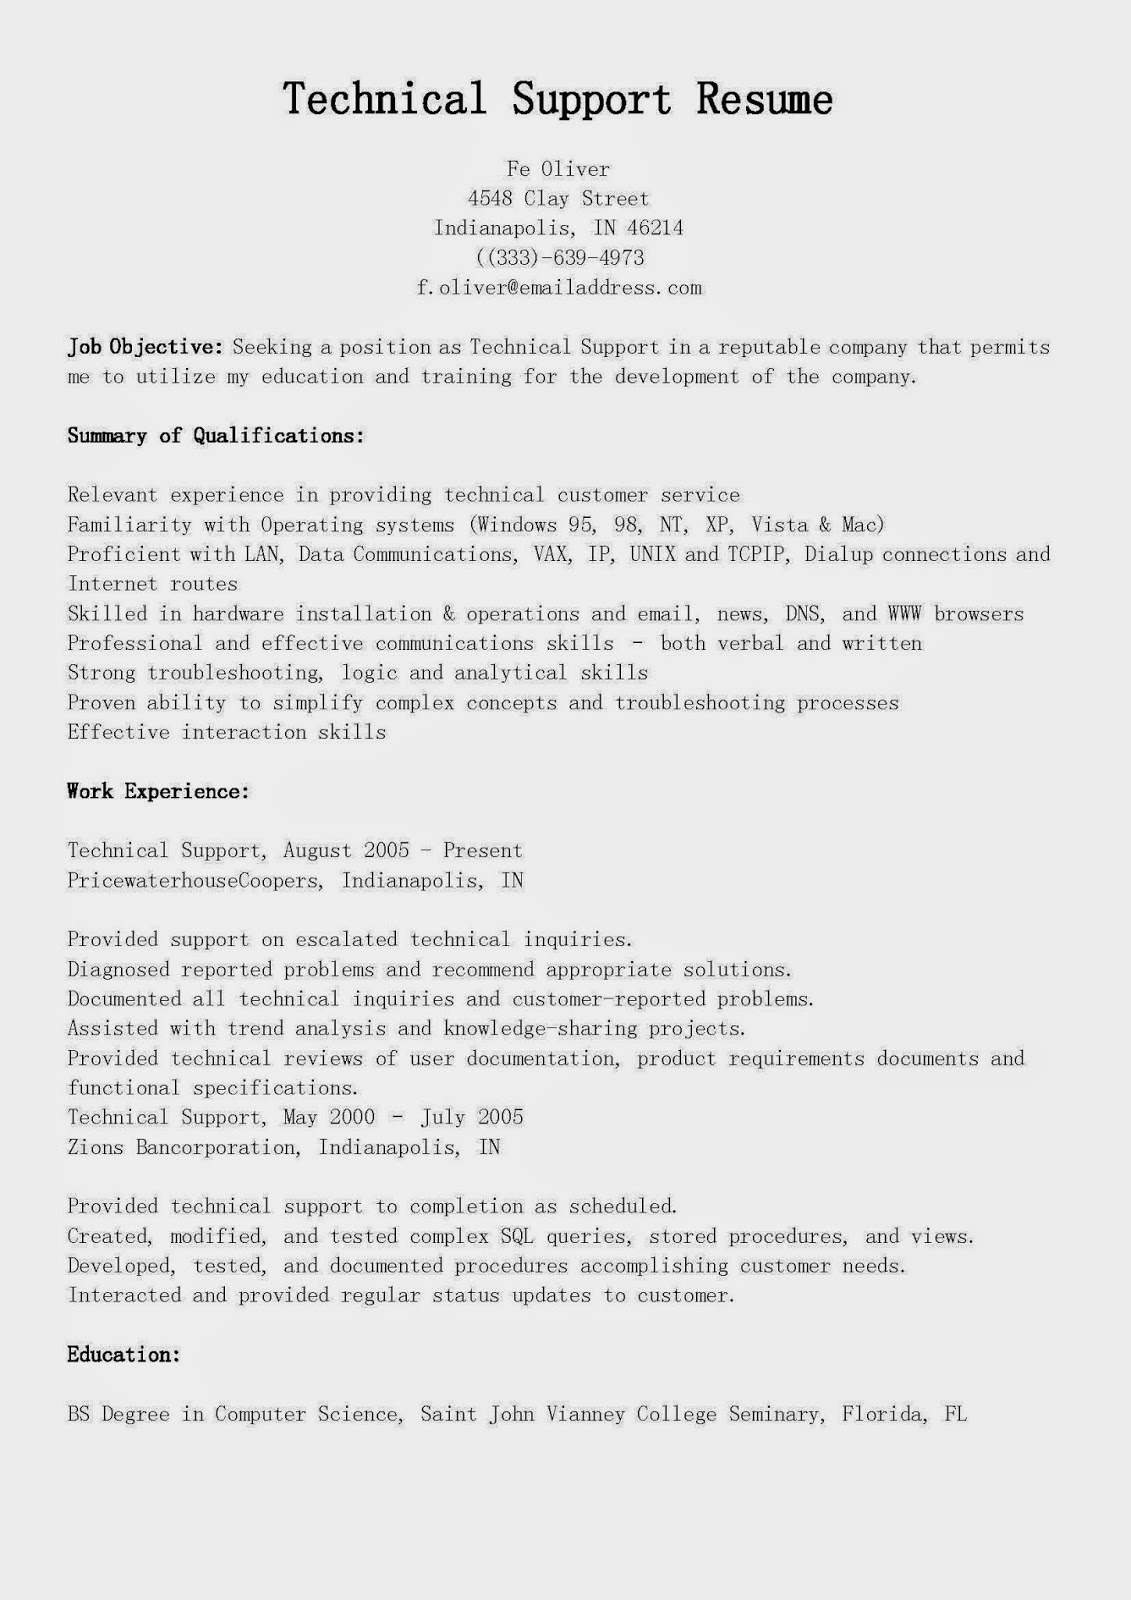 Cnc applications engineer resume